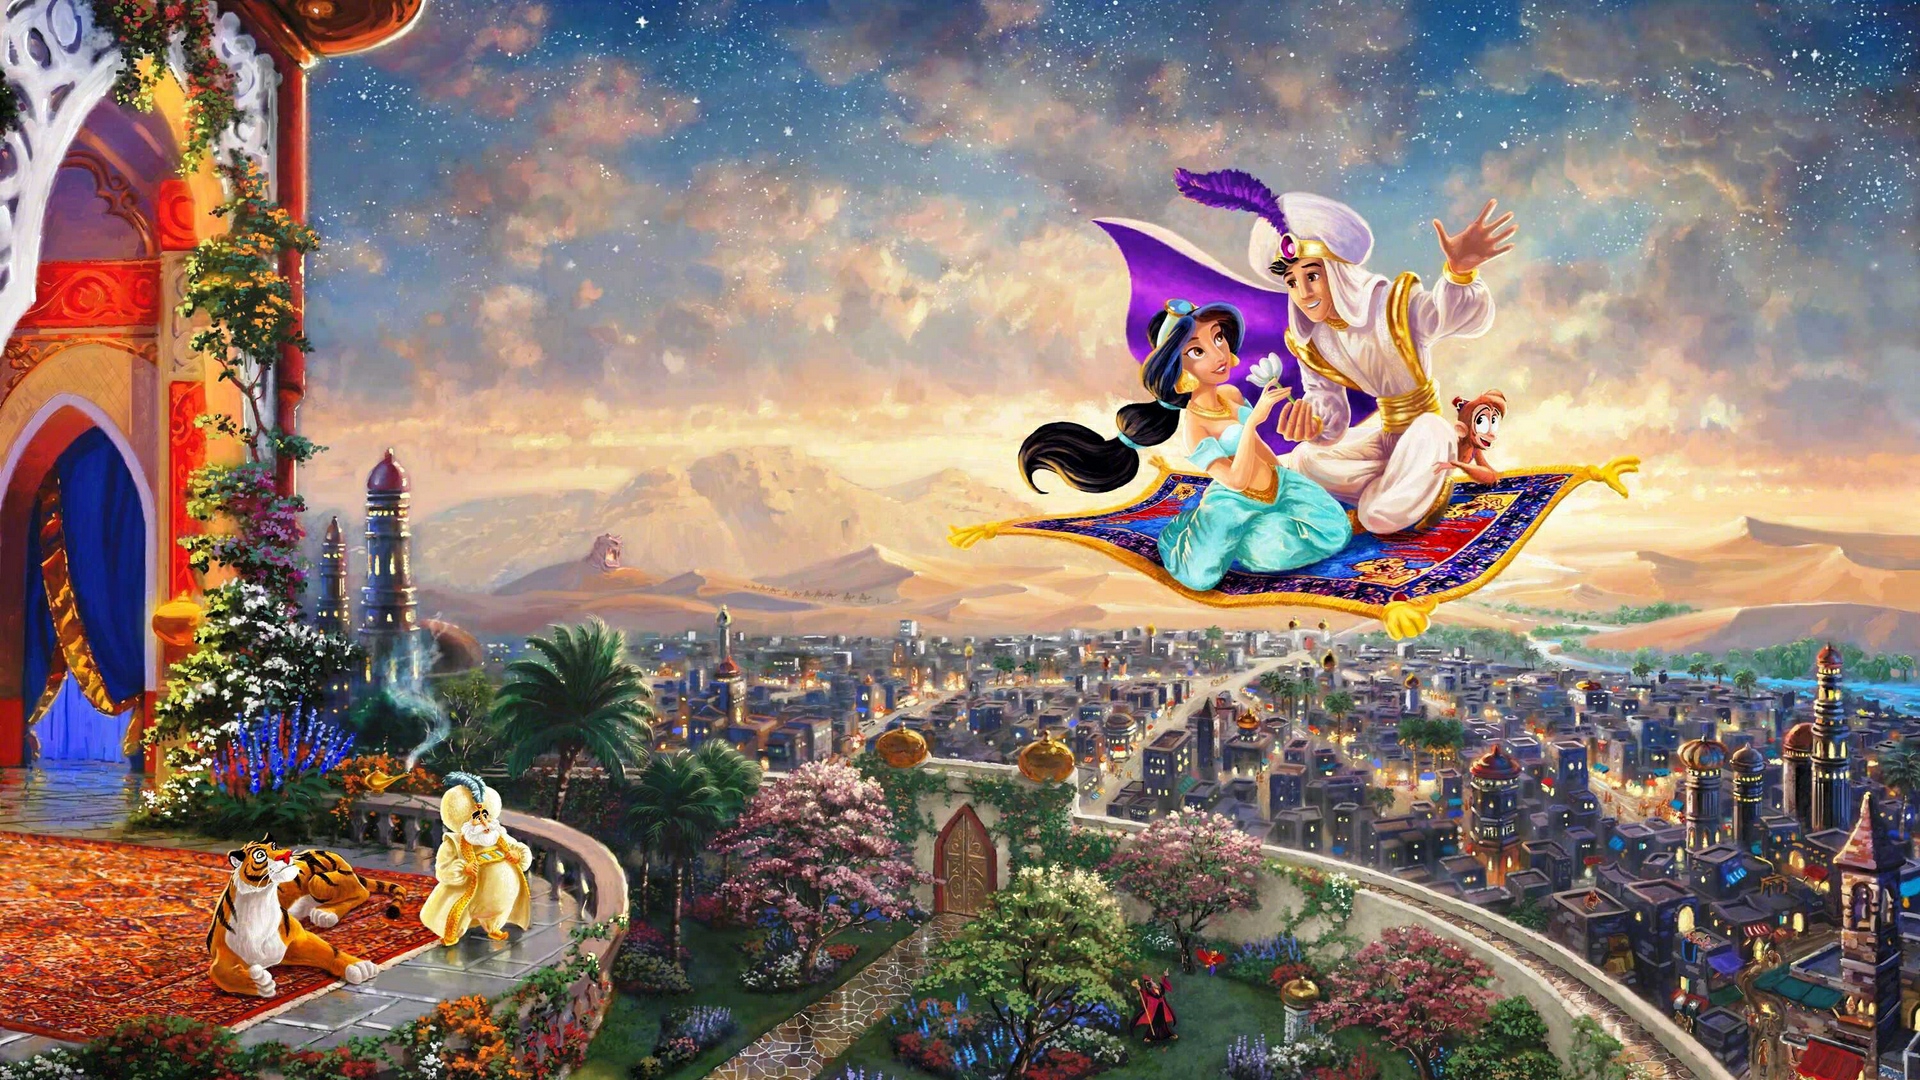 Aladdin and Jasmine by Thomas Kinkade